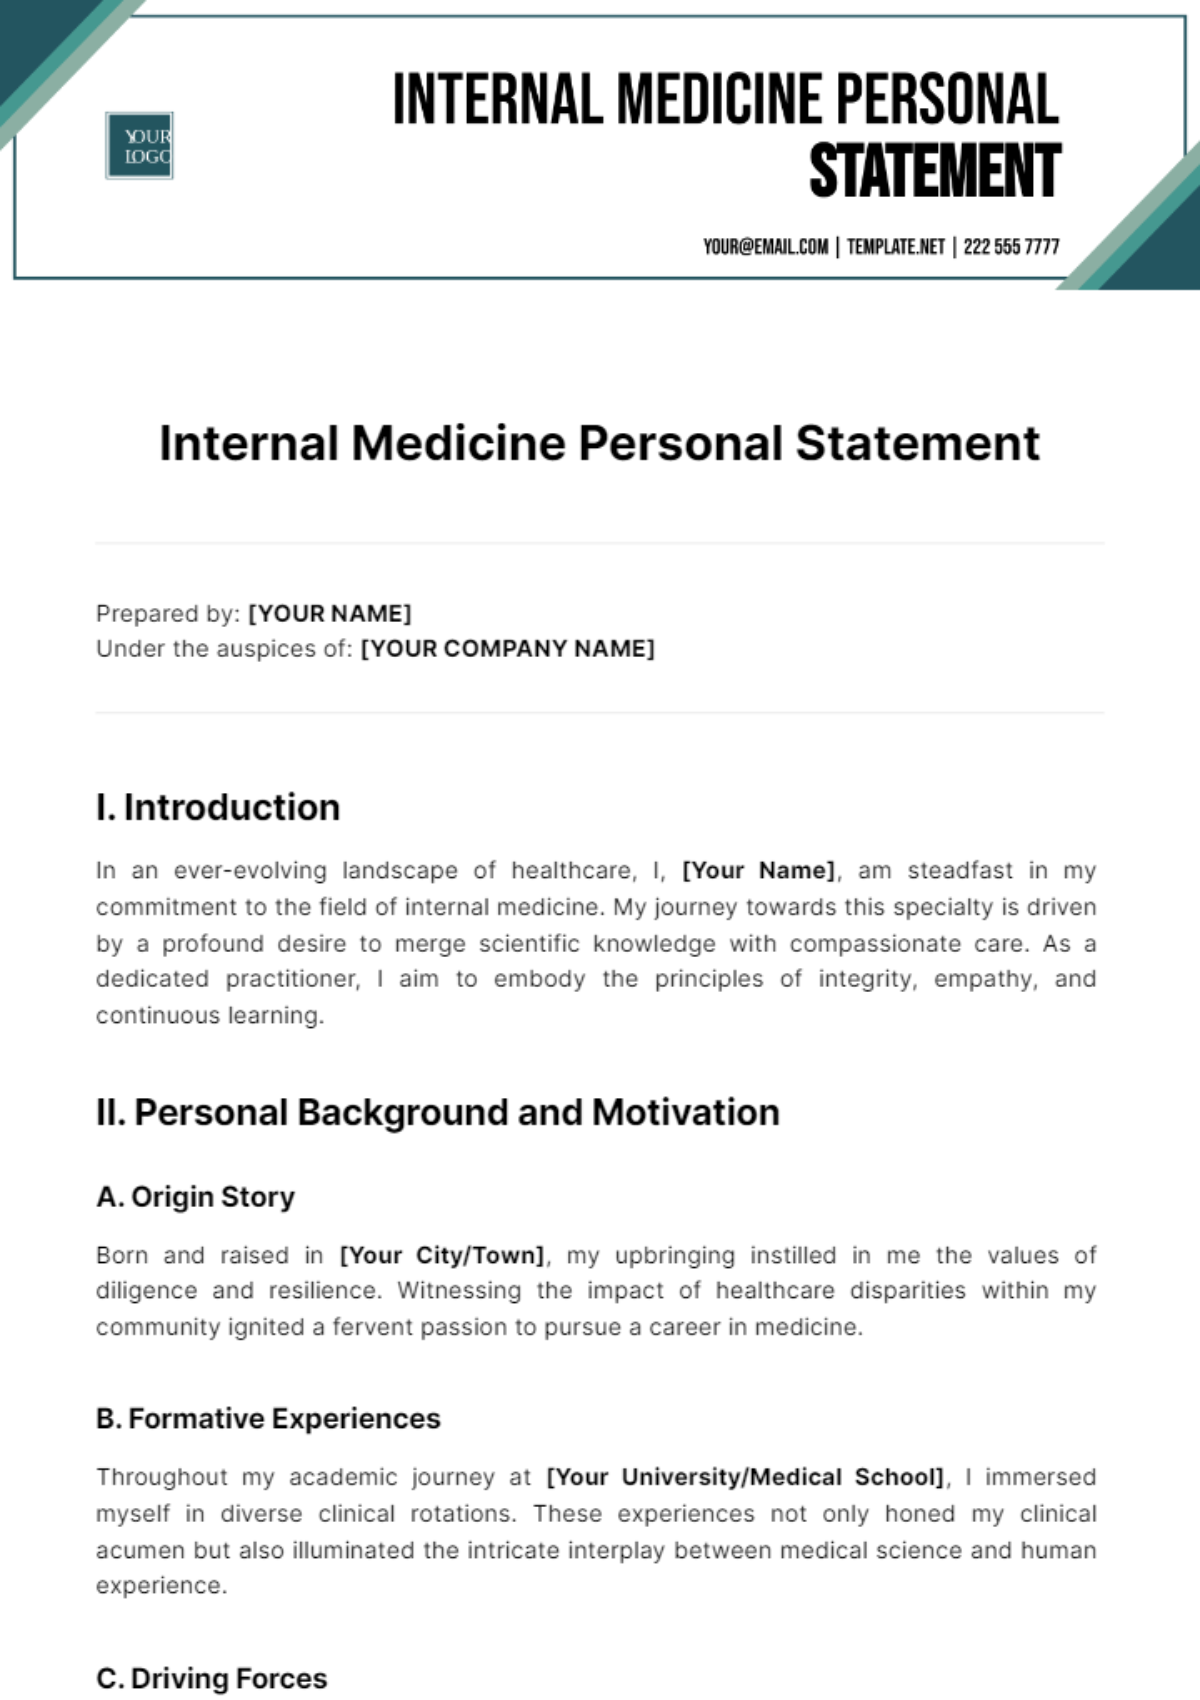 Internal Medicine Personal Statement Template